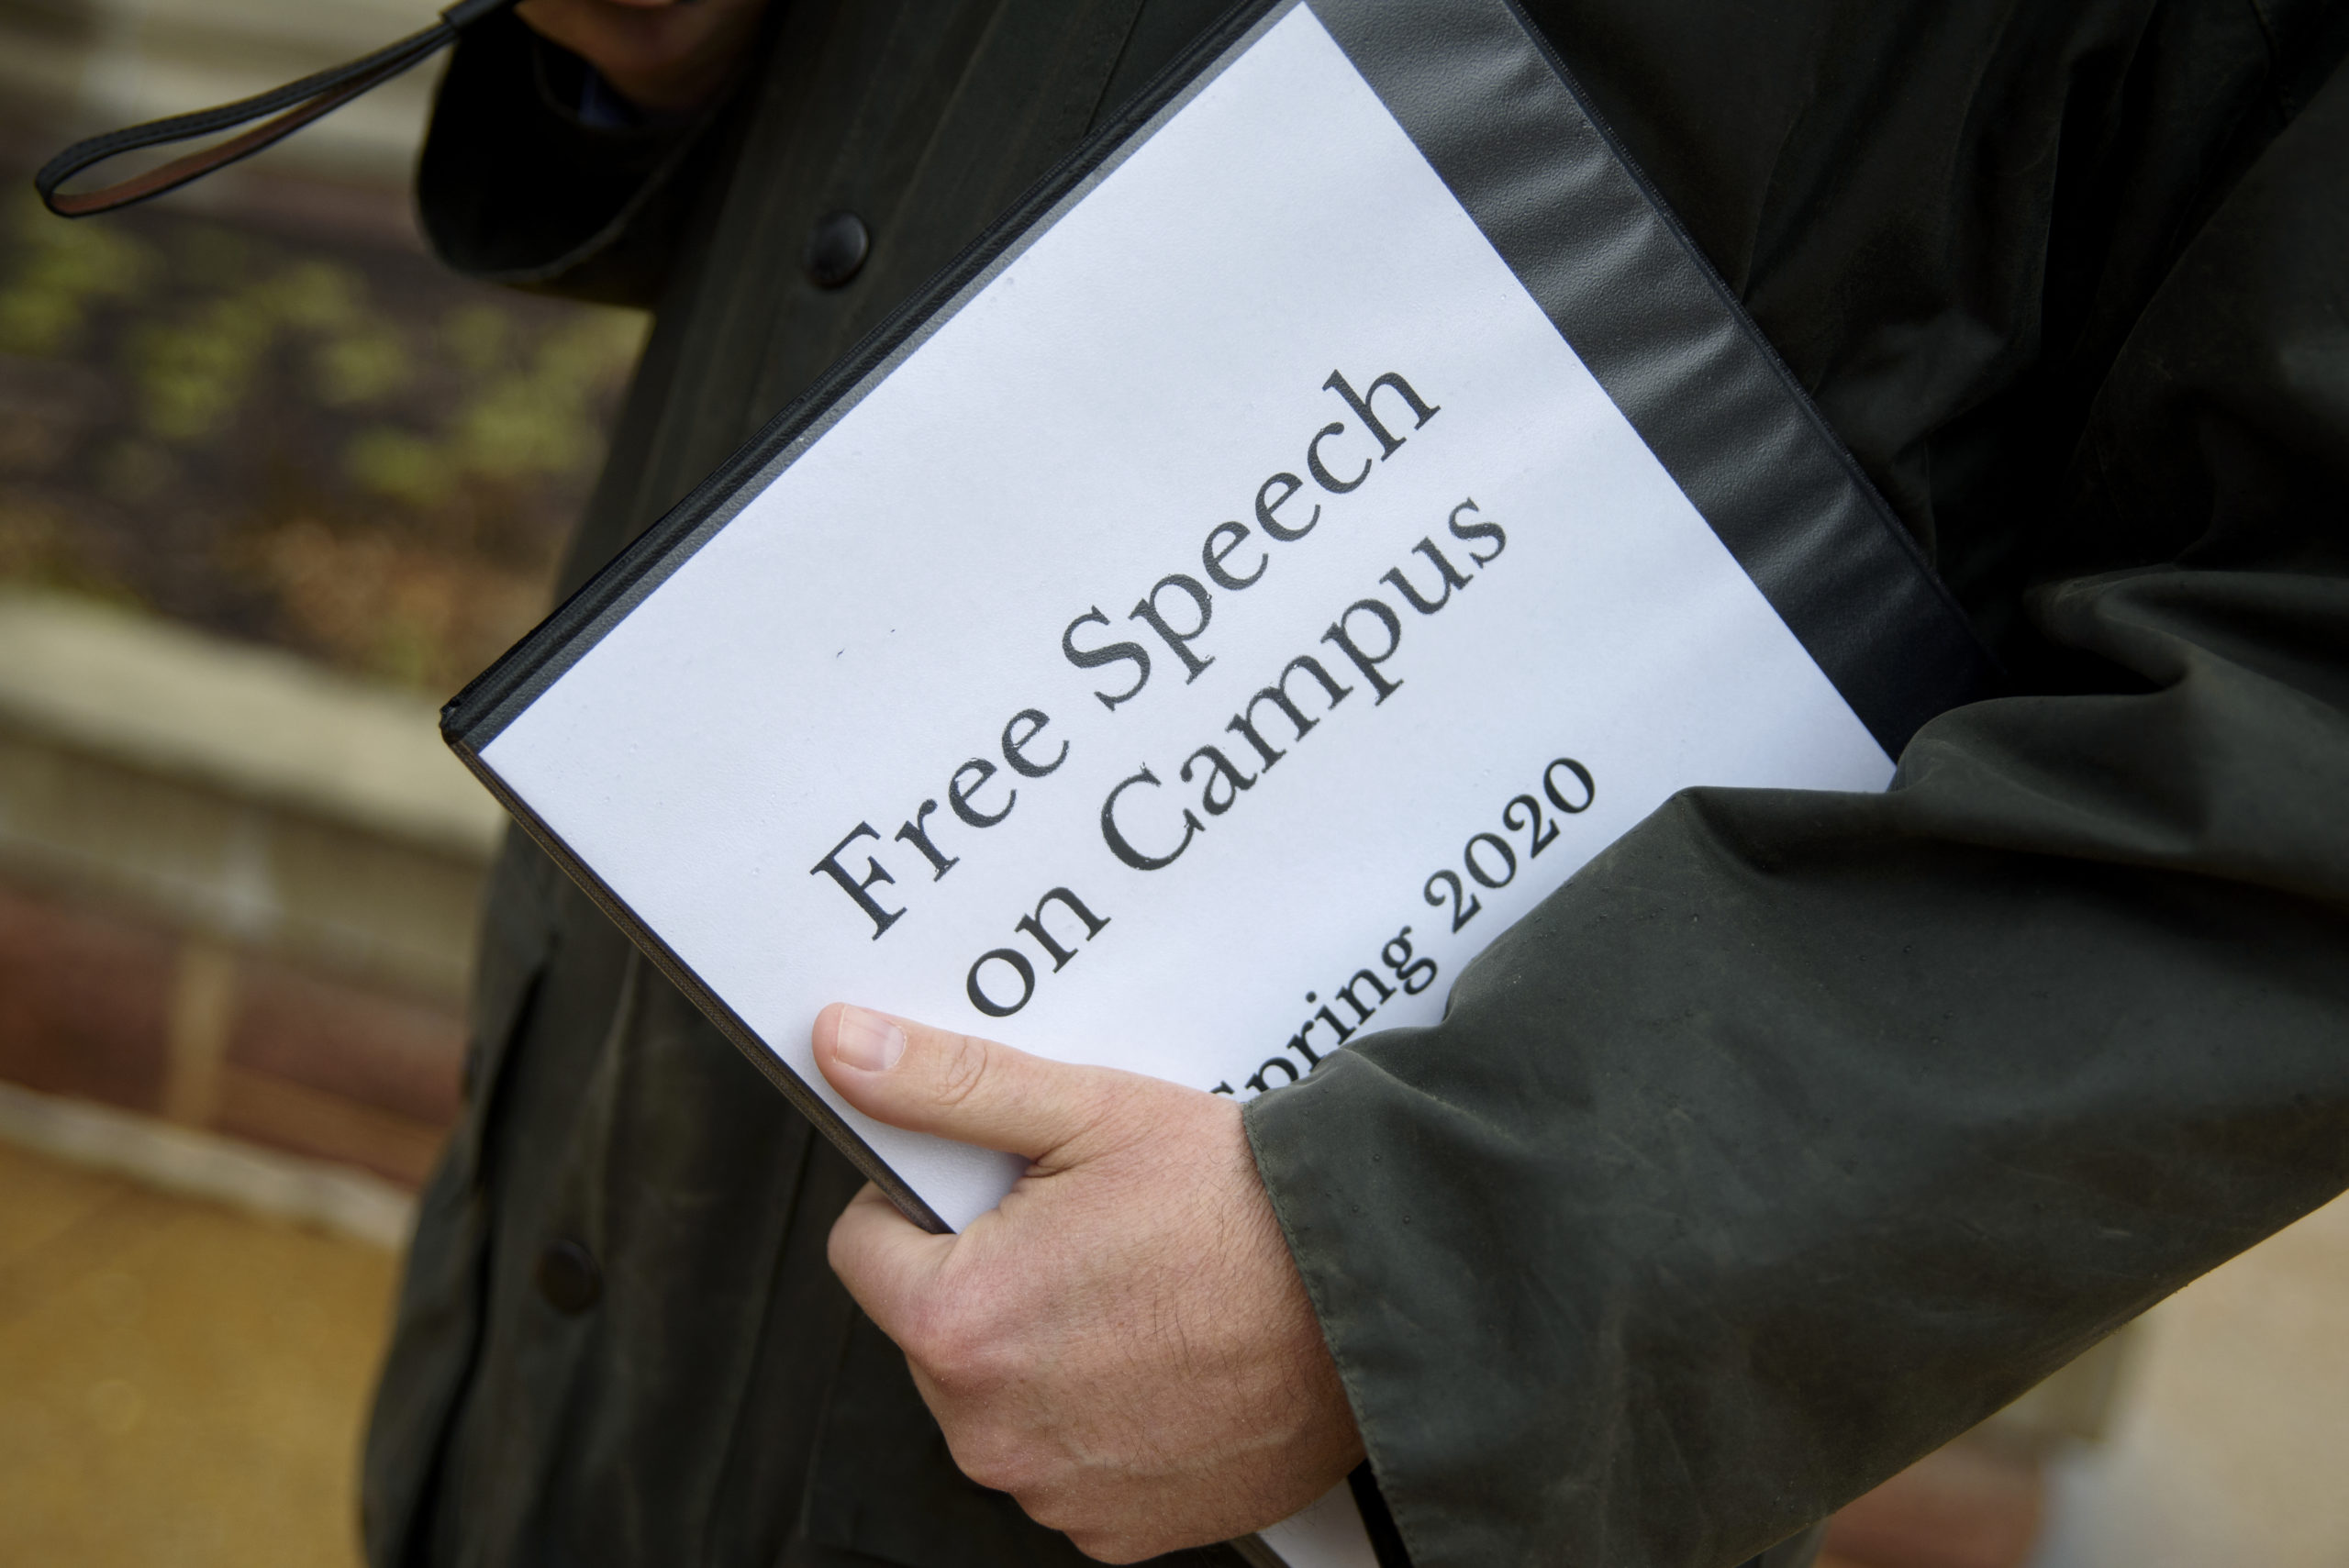 Washington University Chancellor Teaches Class on Campus Free Speech